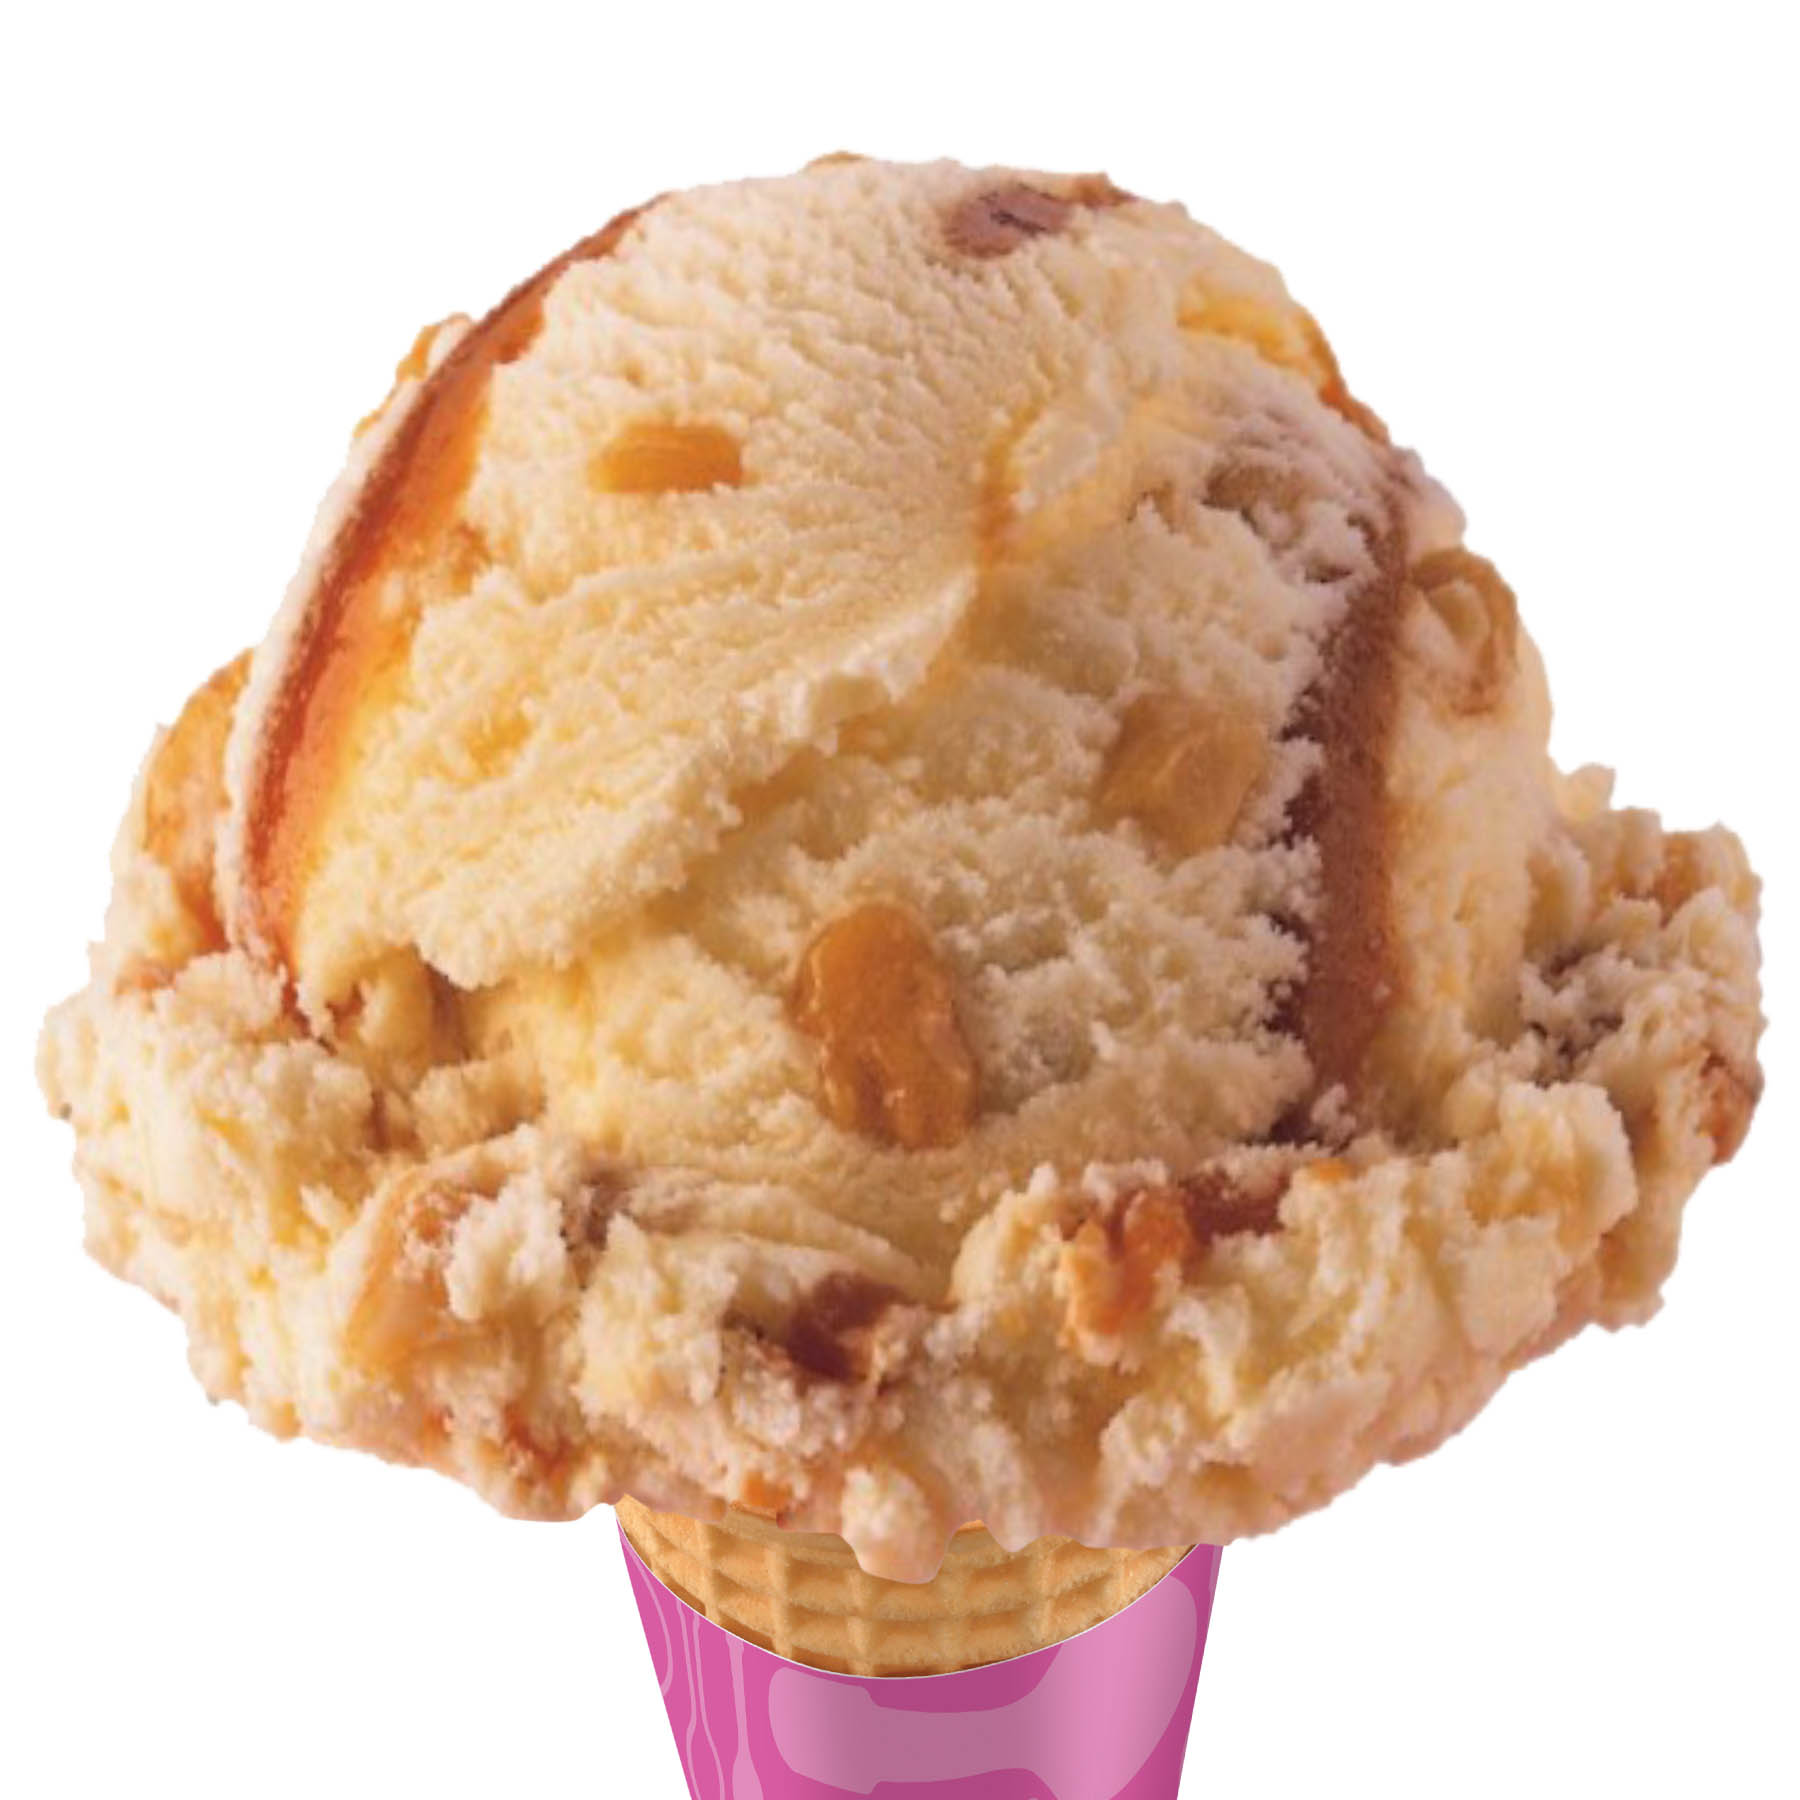 baskin robbins ice cream flavors